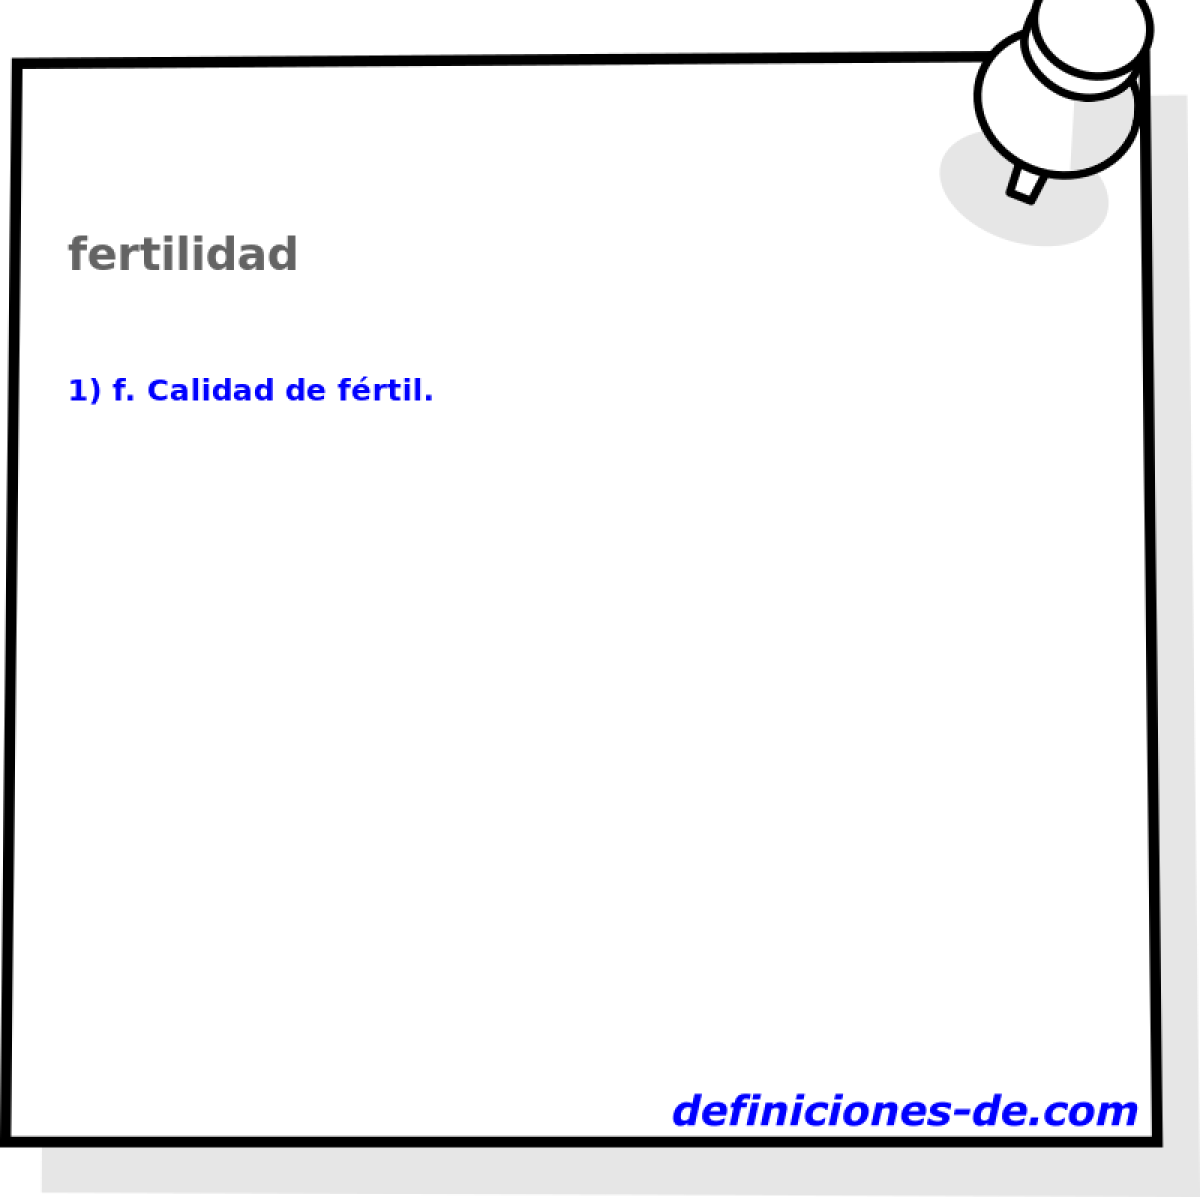 fertilidad 